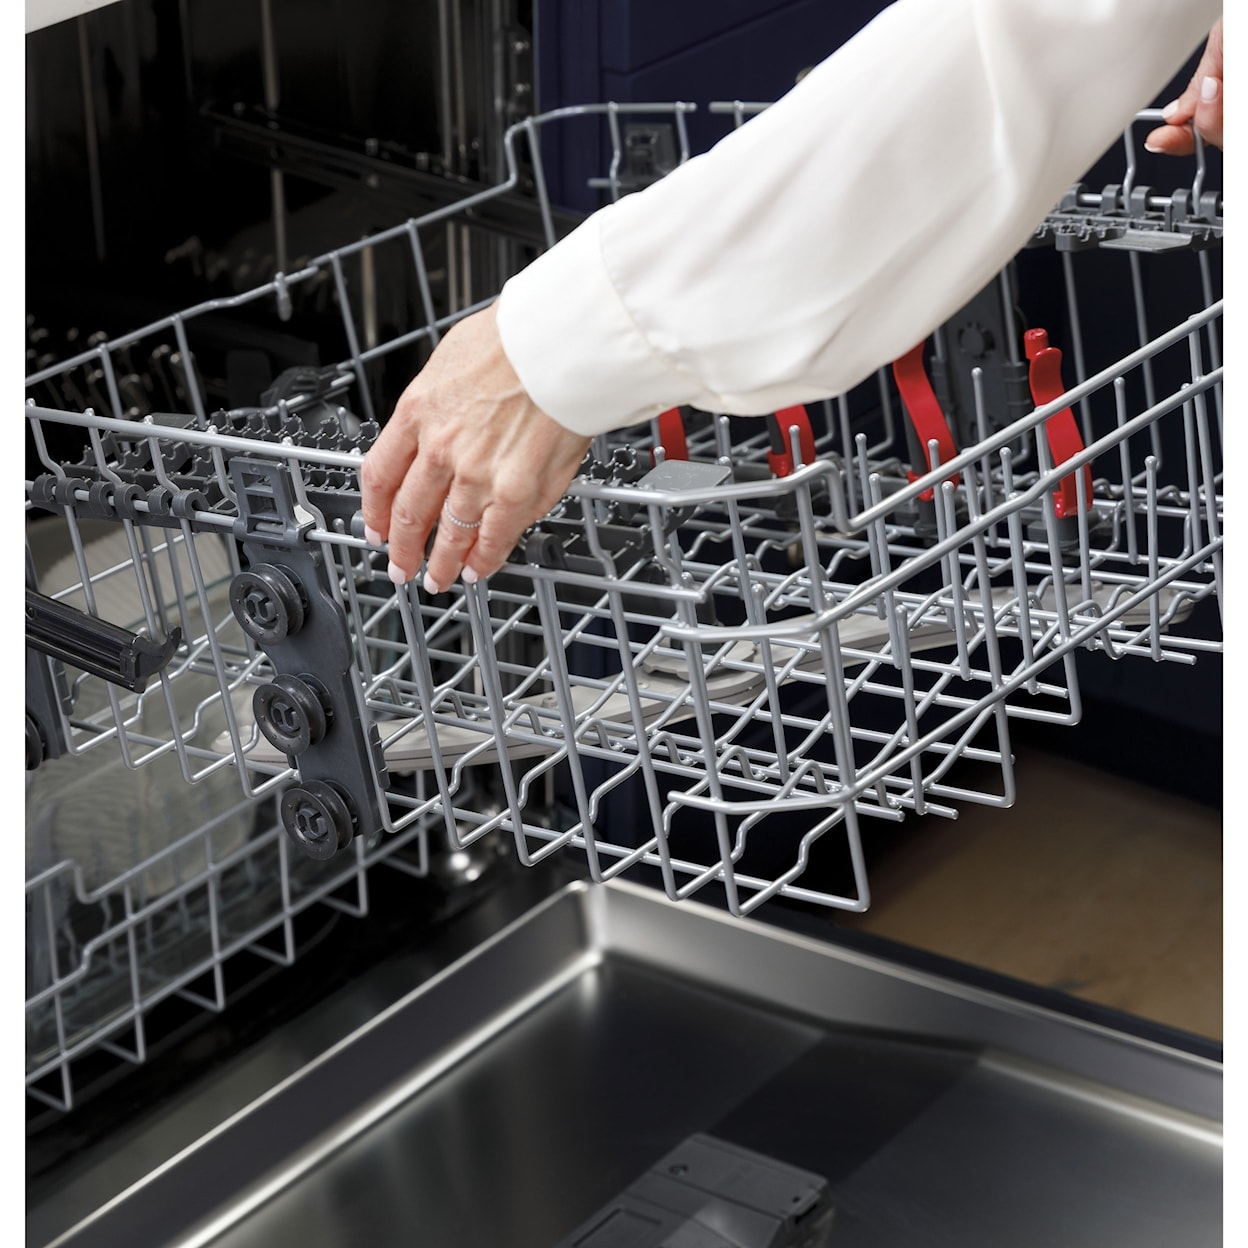 GE Appliances Dishwashers GE® Stainless Steel Interior Dishwasher